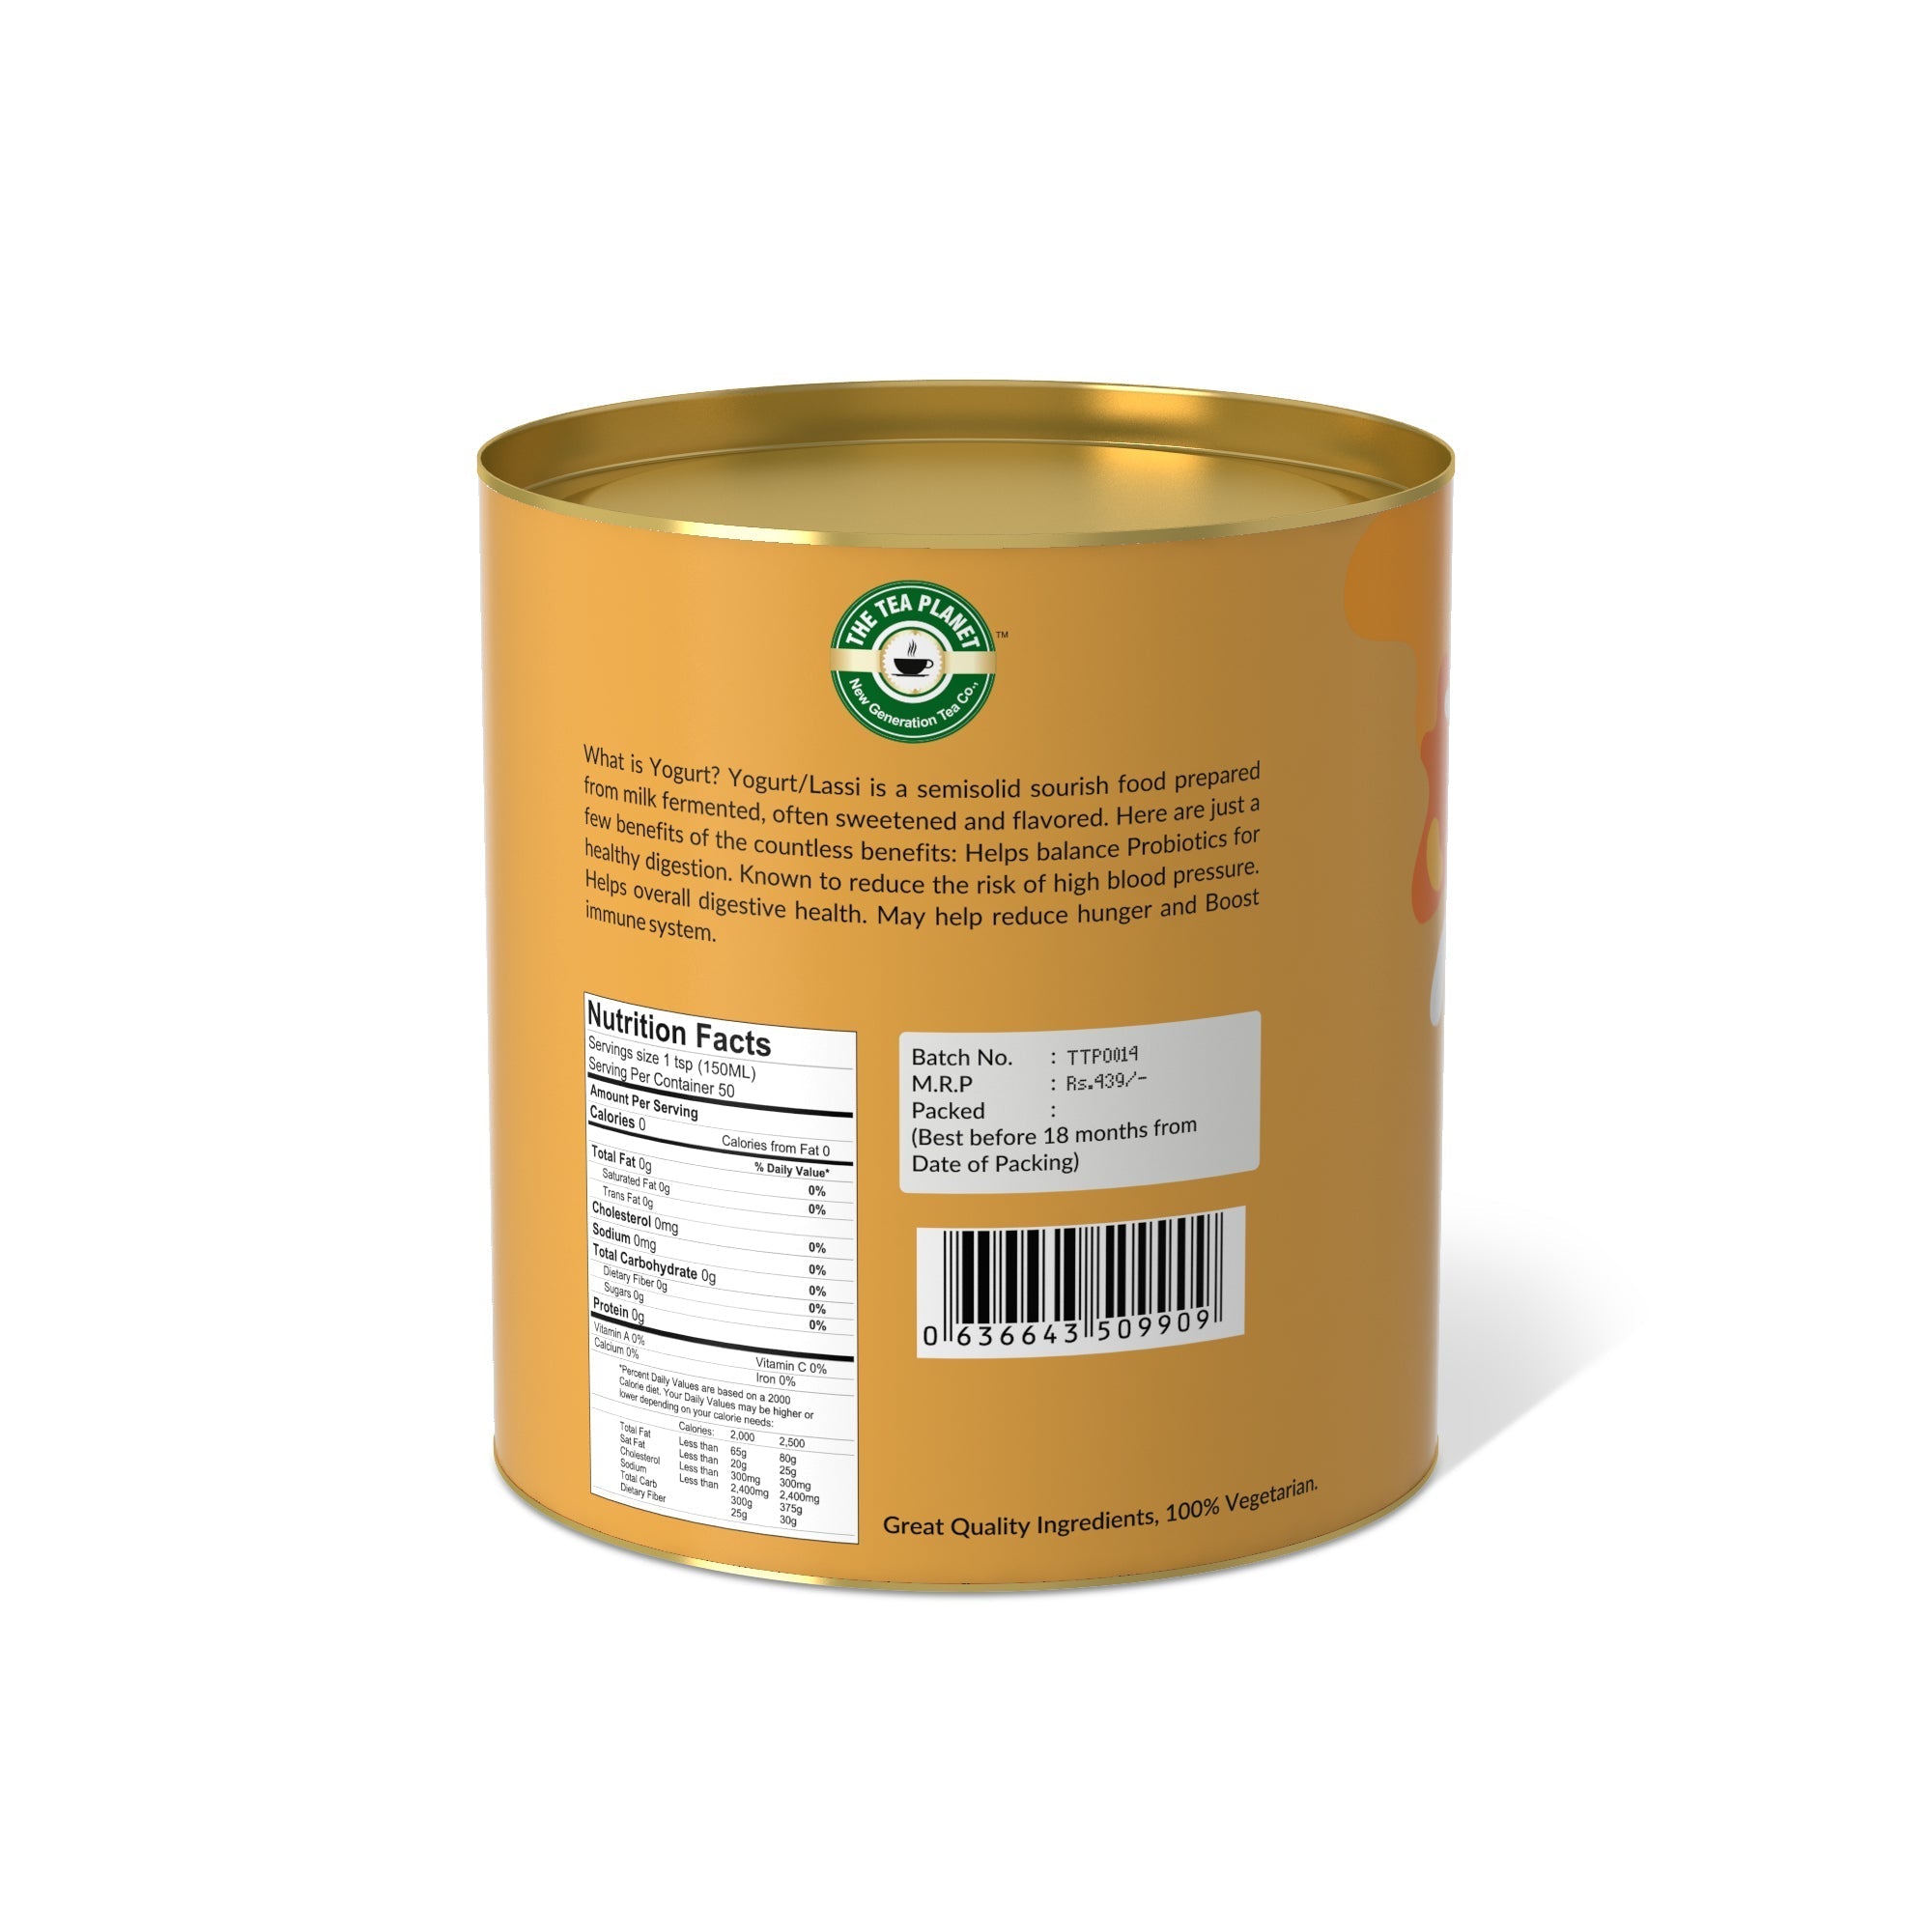 Mandarin Orange Yogurt Mix - 800 gms